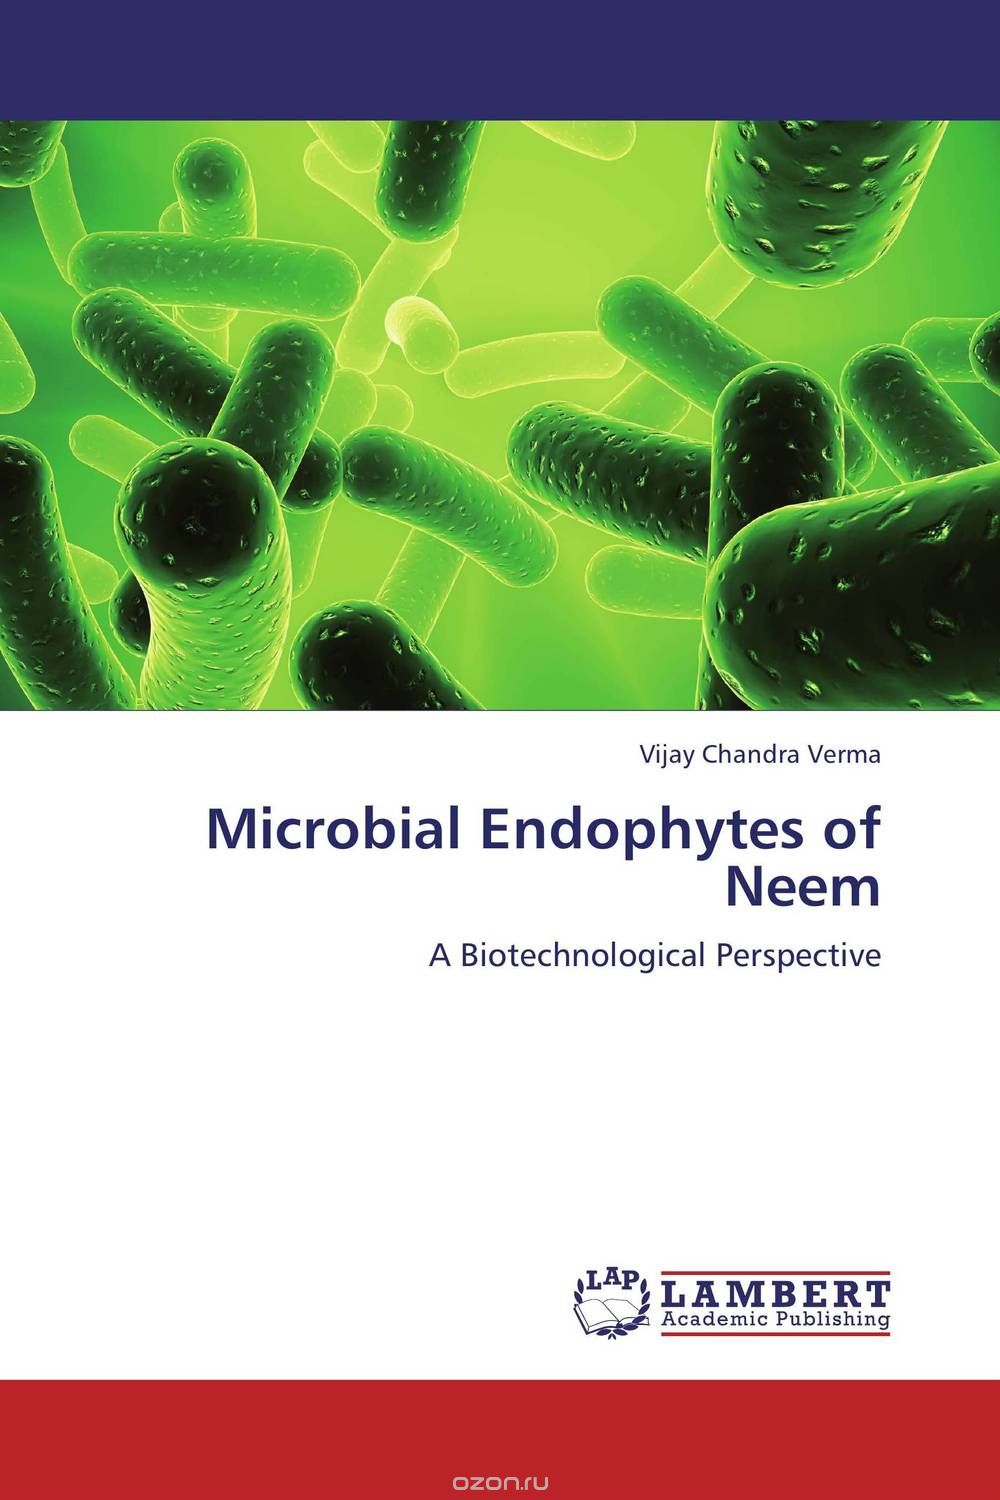 Скачать книгу "Microbial Endophytes of Neem"